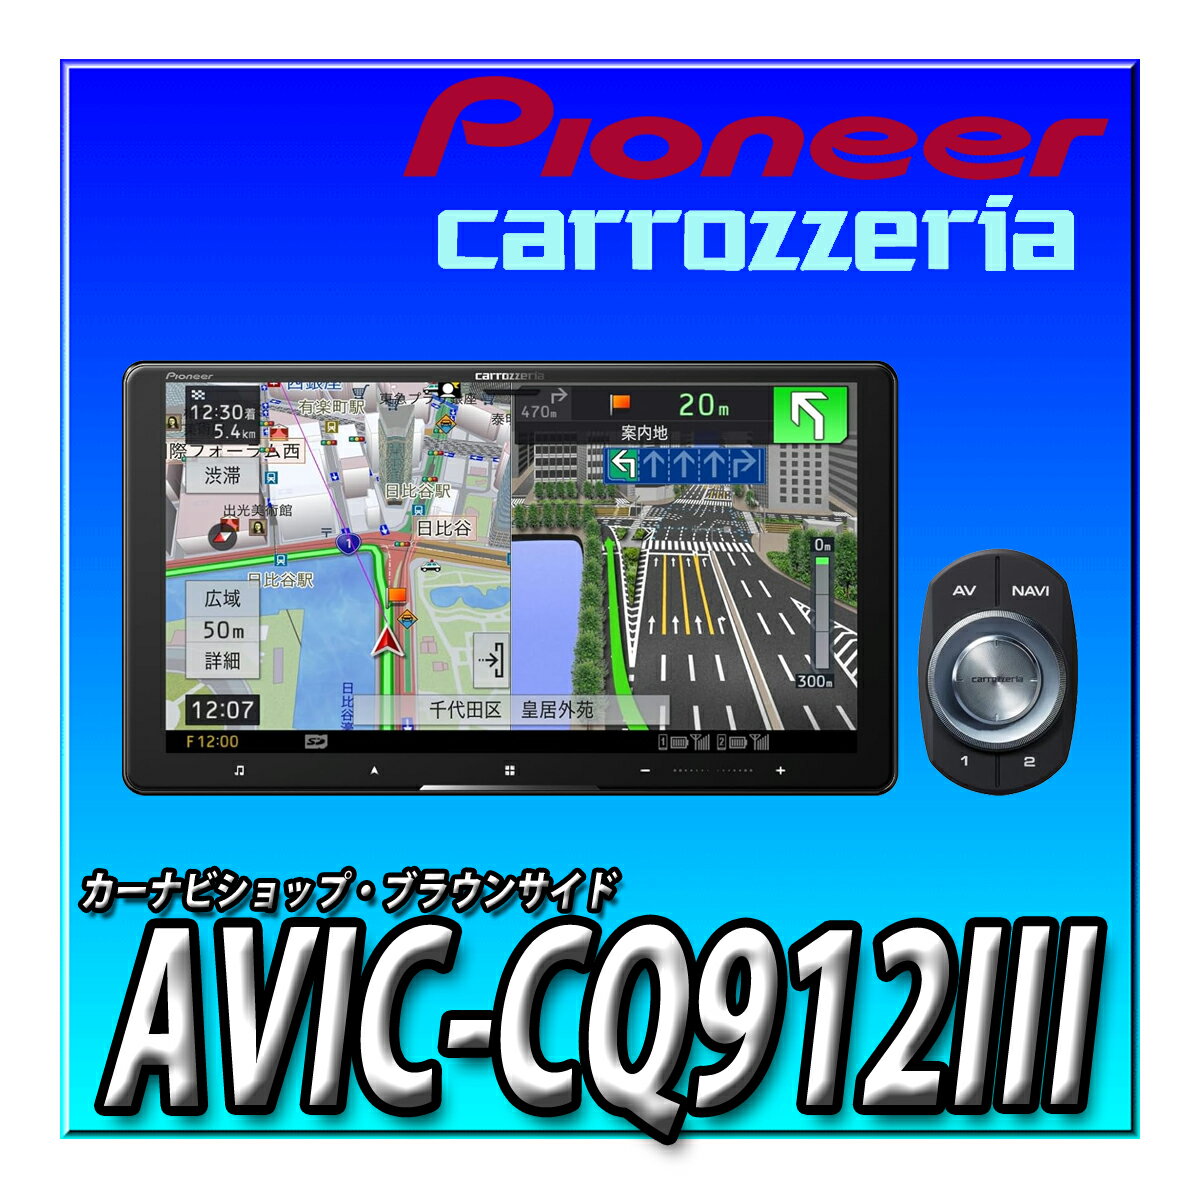 AVIC-CQ912III 9インチ サイバーナビ 無料地図更新 フルセグ DVD CD Bluetooth SD USB ハイレゾ HD画質 カロッツェリア Pioneer カーナビ